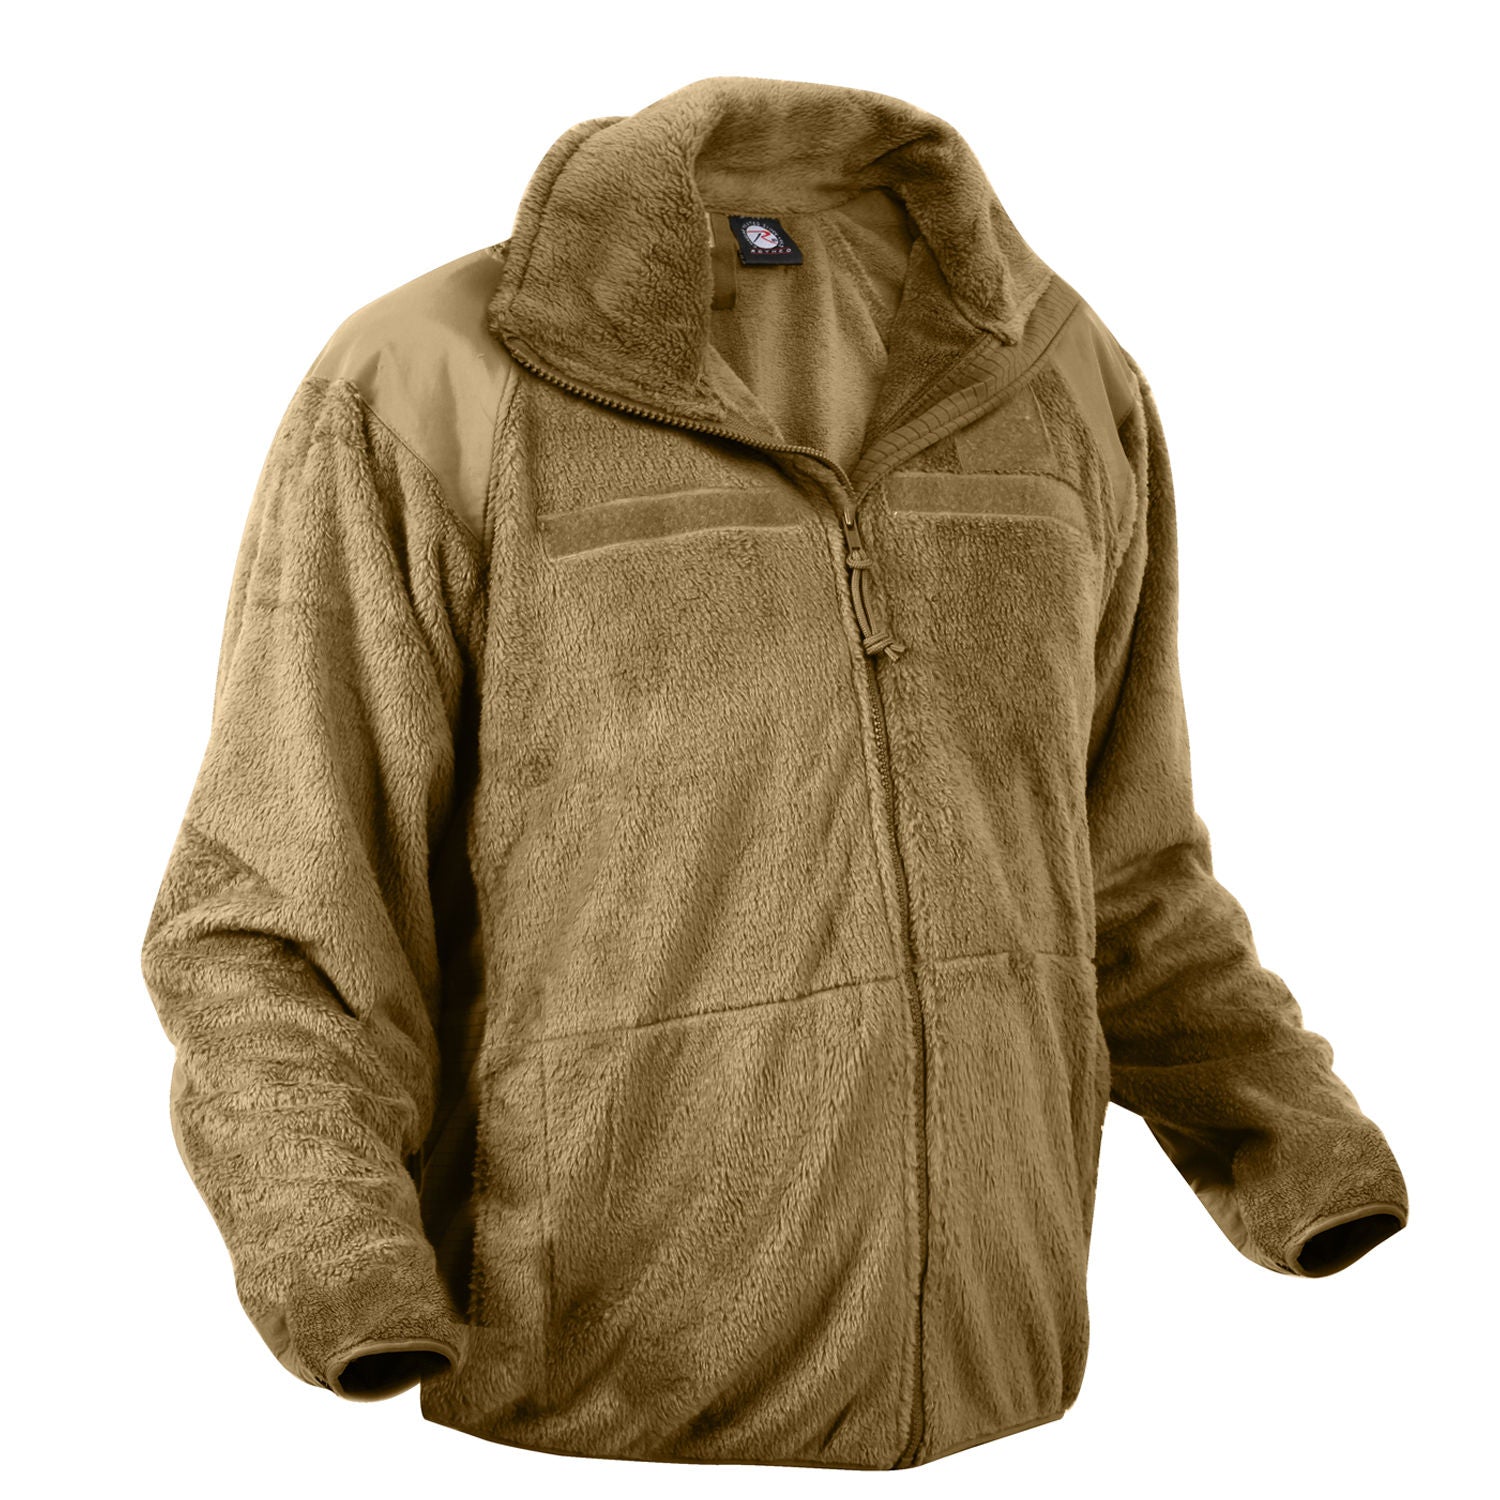 U.S. ARMY Generation III Level 3 ECWCS Fleece Jacket with Insignia – Military Uniform Supply, Inc.